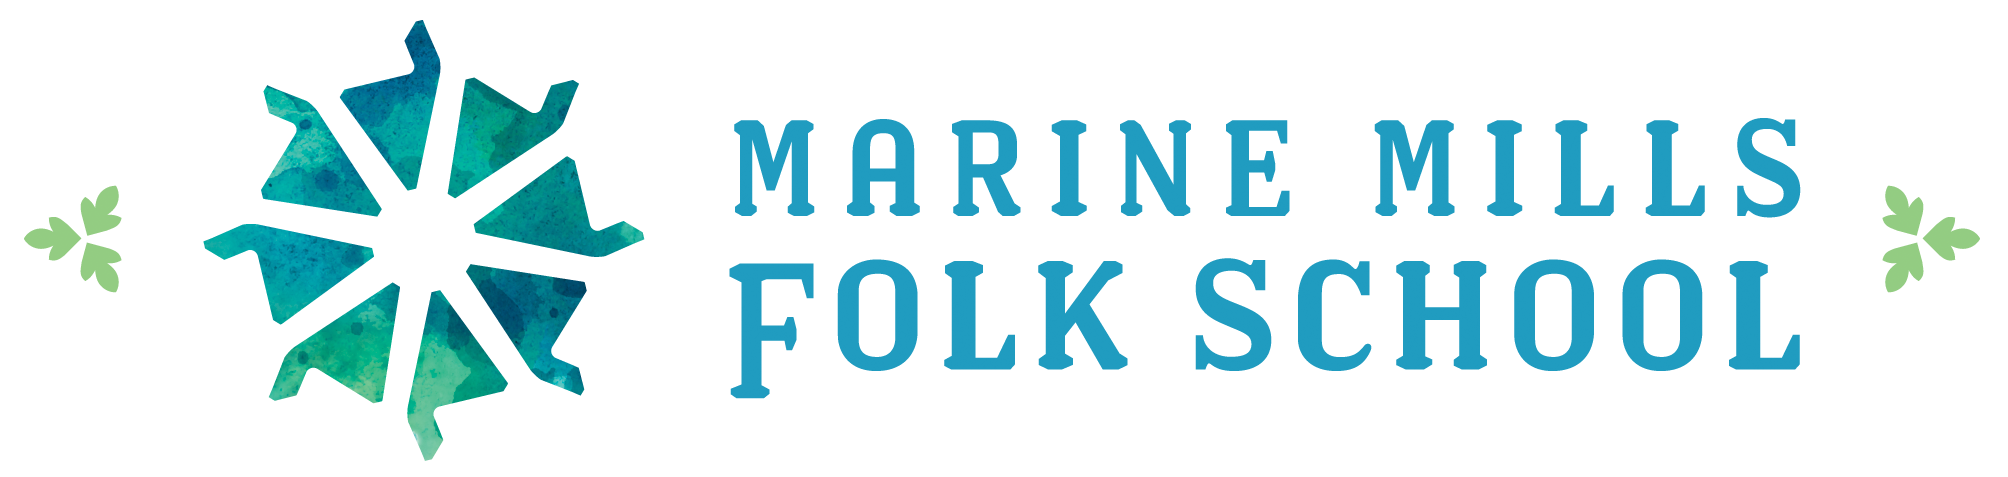 Marine Mills Folk School